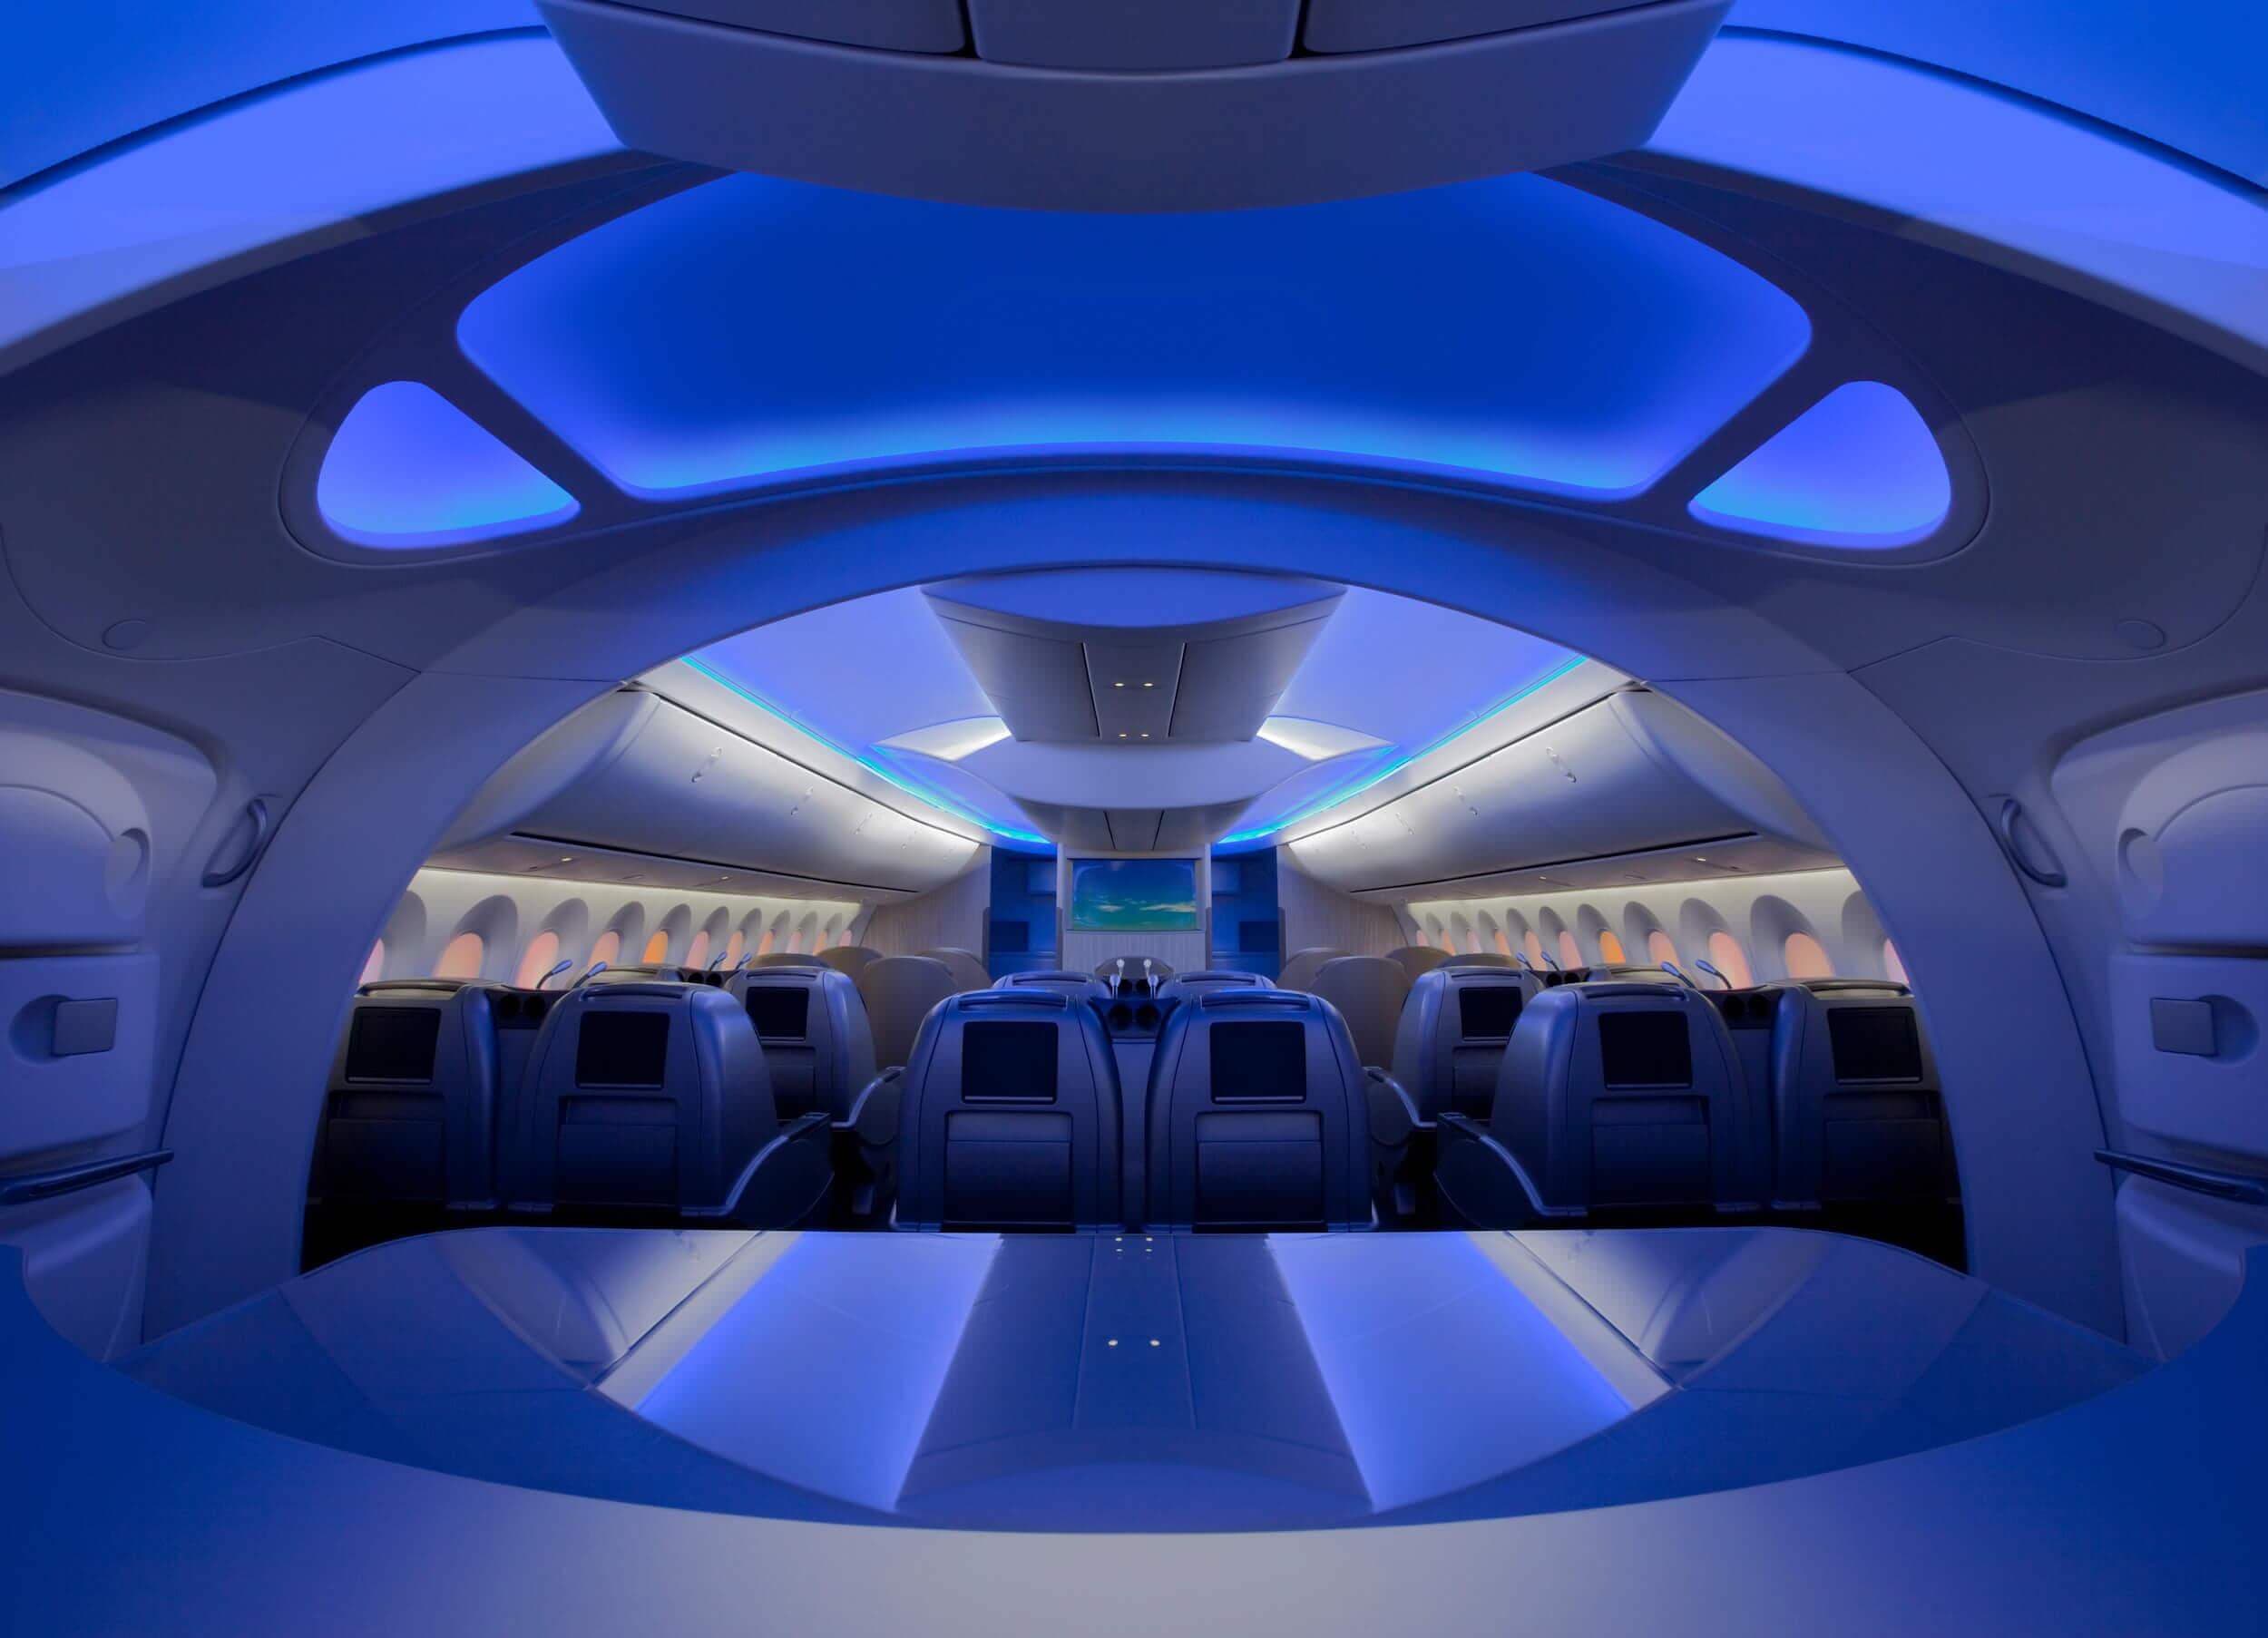 Teague-designed Boeing 787 Dreamliner cabin interior